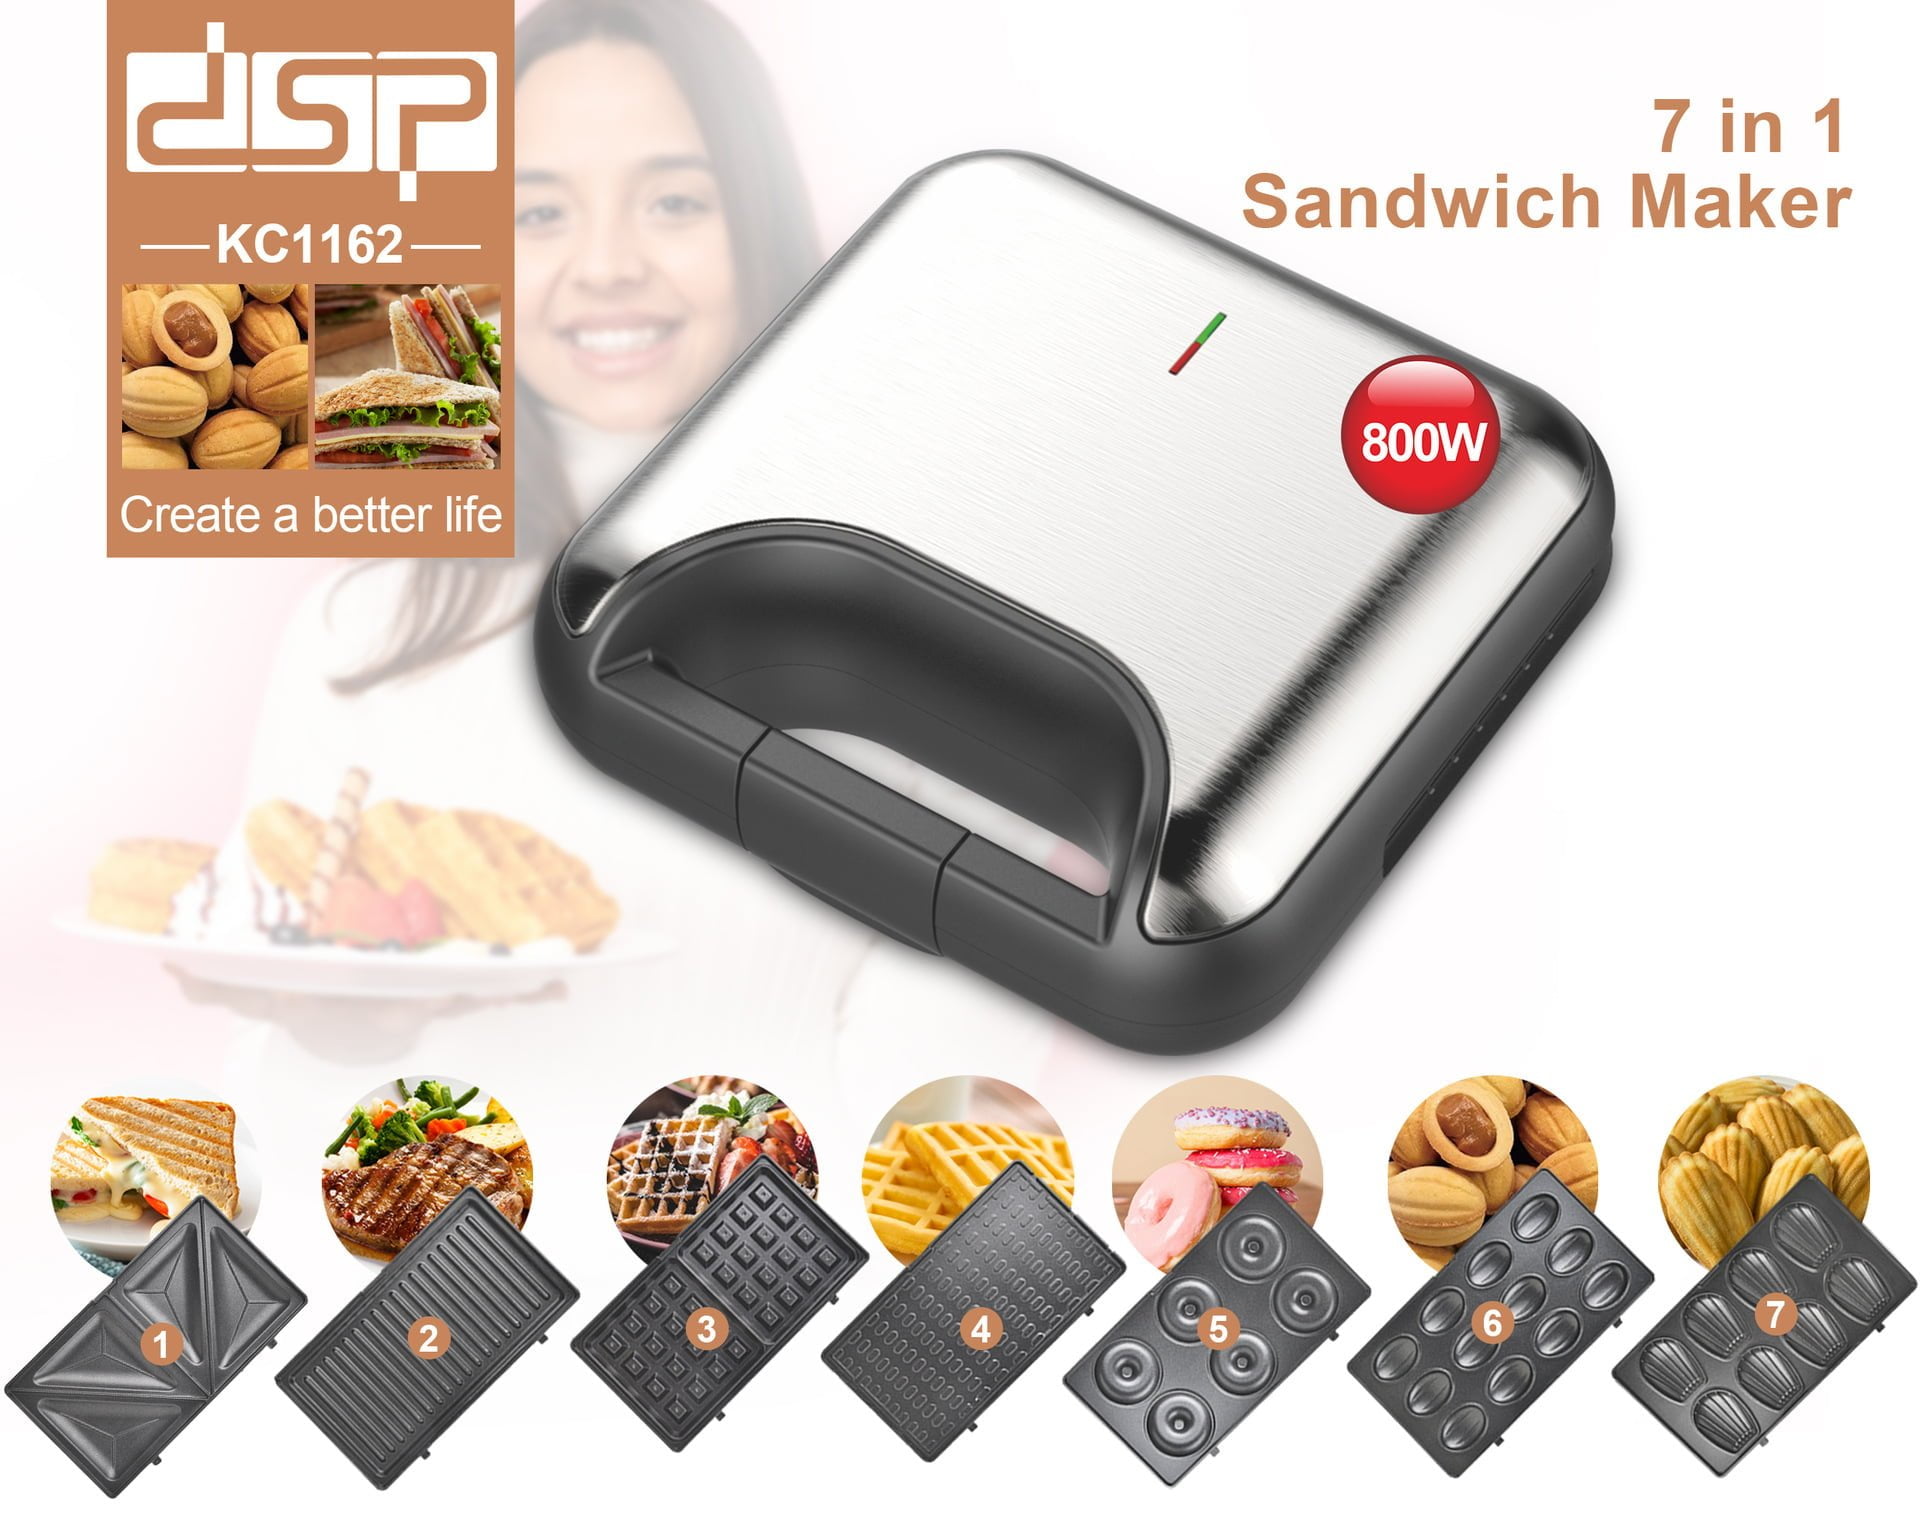 DSP KC1162 -7in1 Sandwich Maker Removable plates donut maker waffle maker »   - Online Shopping Qatar